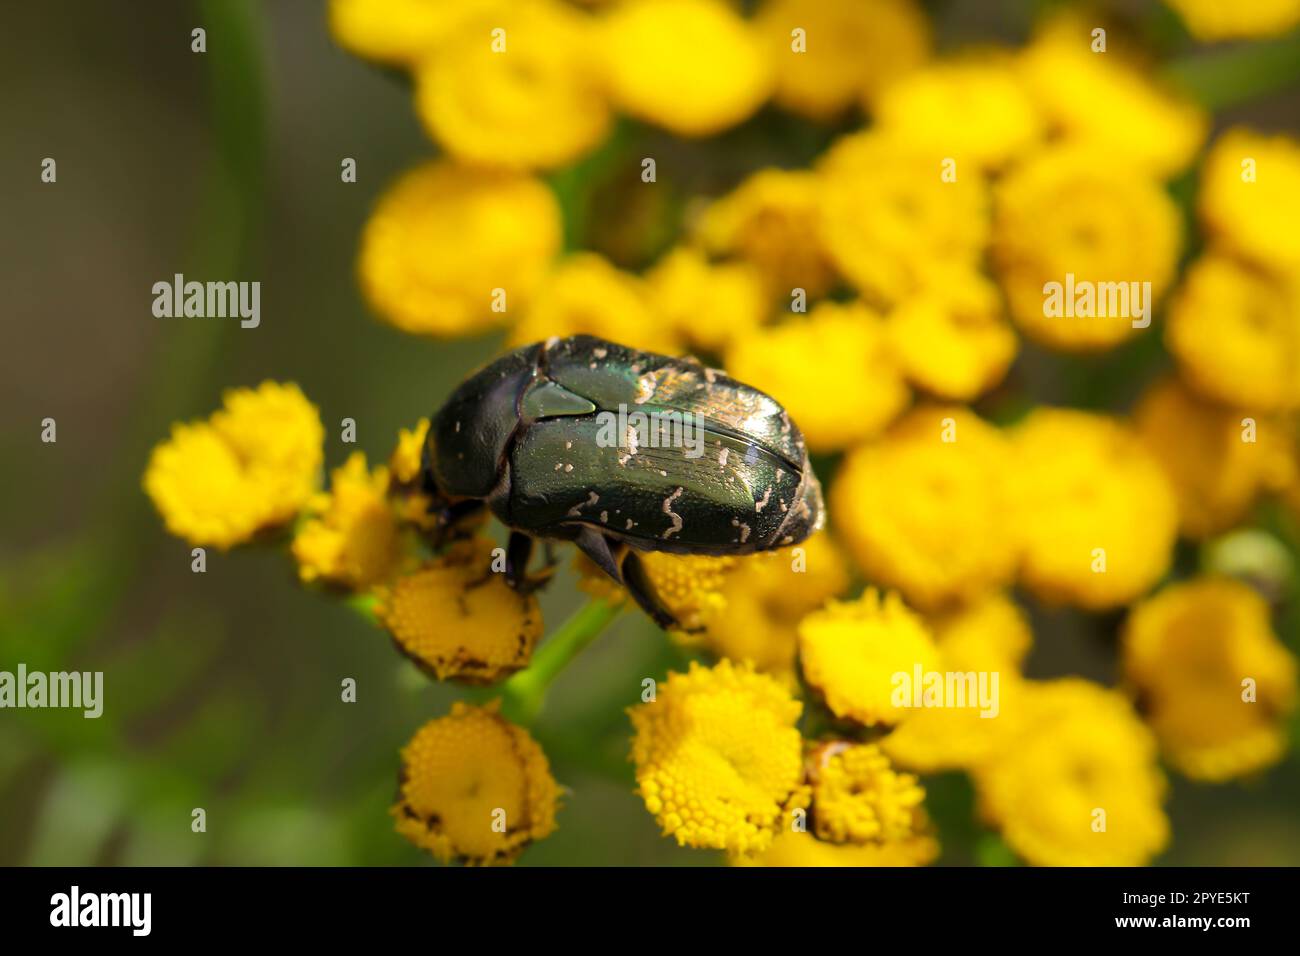 A rosebug on a rain fernl. Close up of a green rosebug. Stock Photo